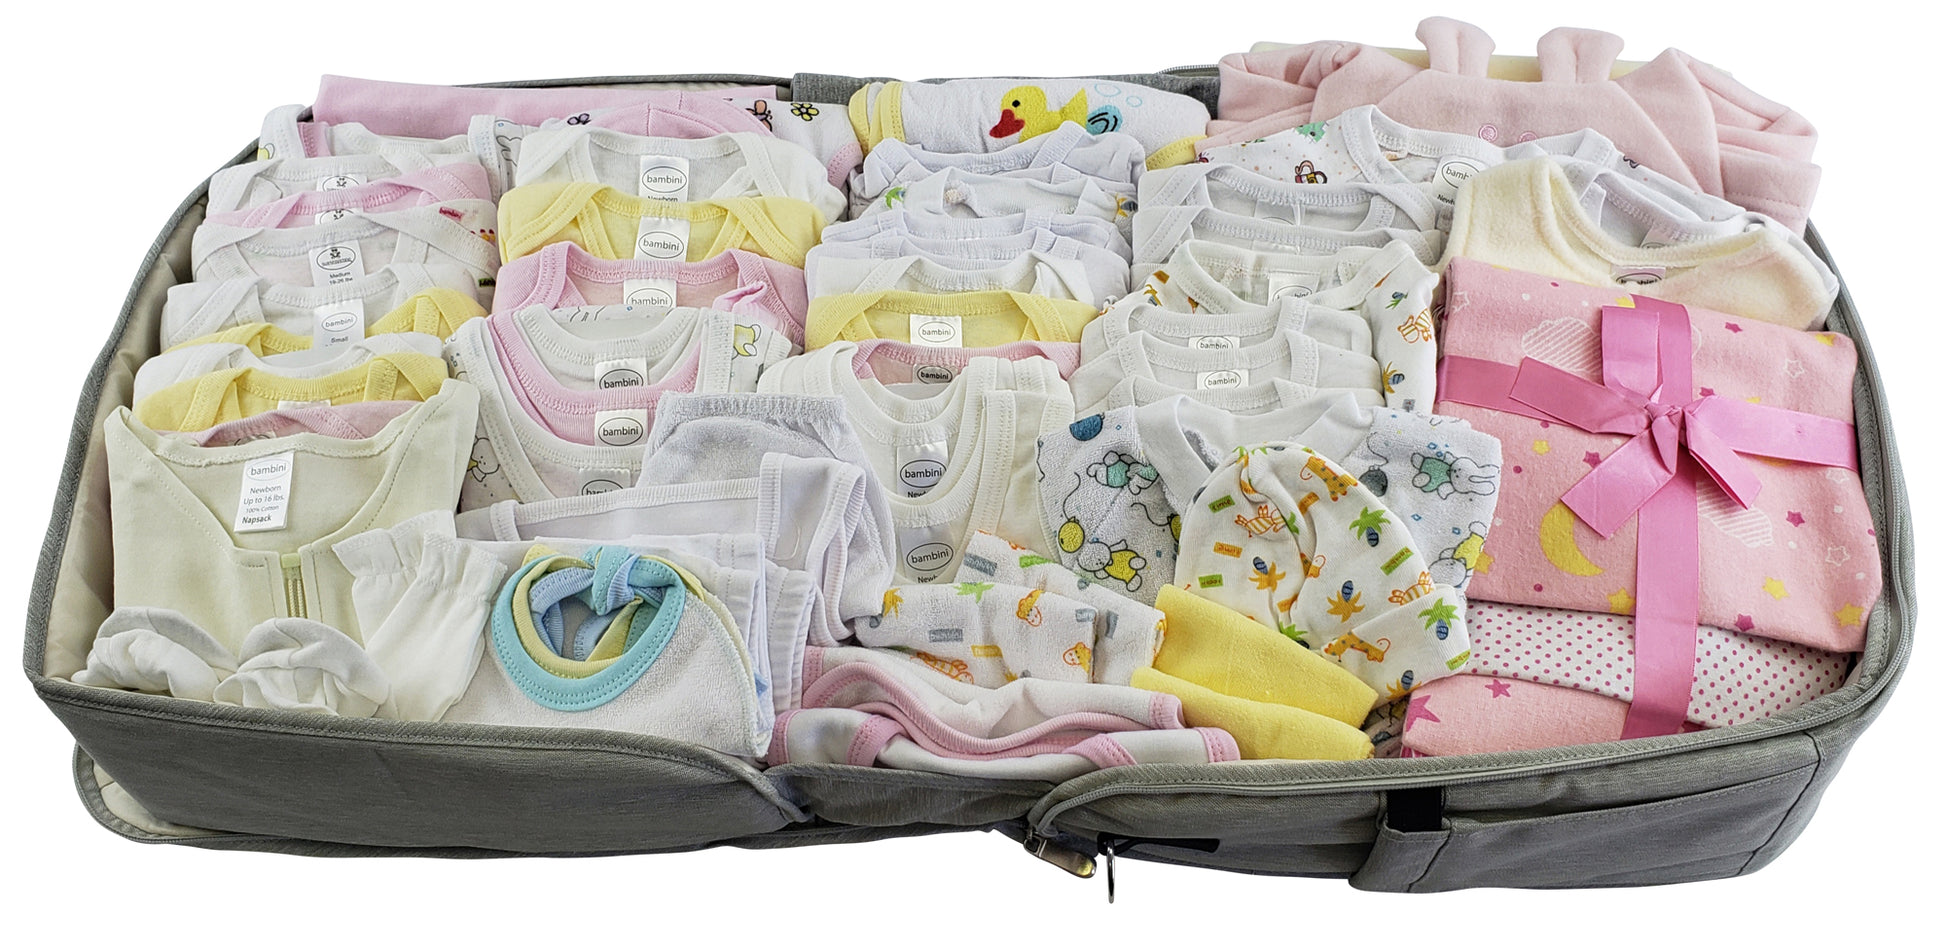 Girls 80 pc Baby Clothing Starter Set with Diaper Bag 808-80-Set